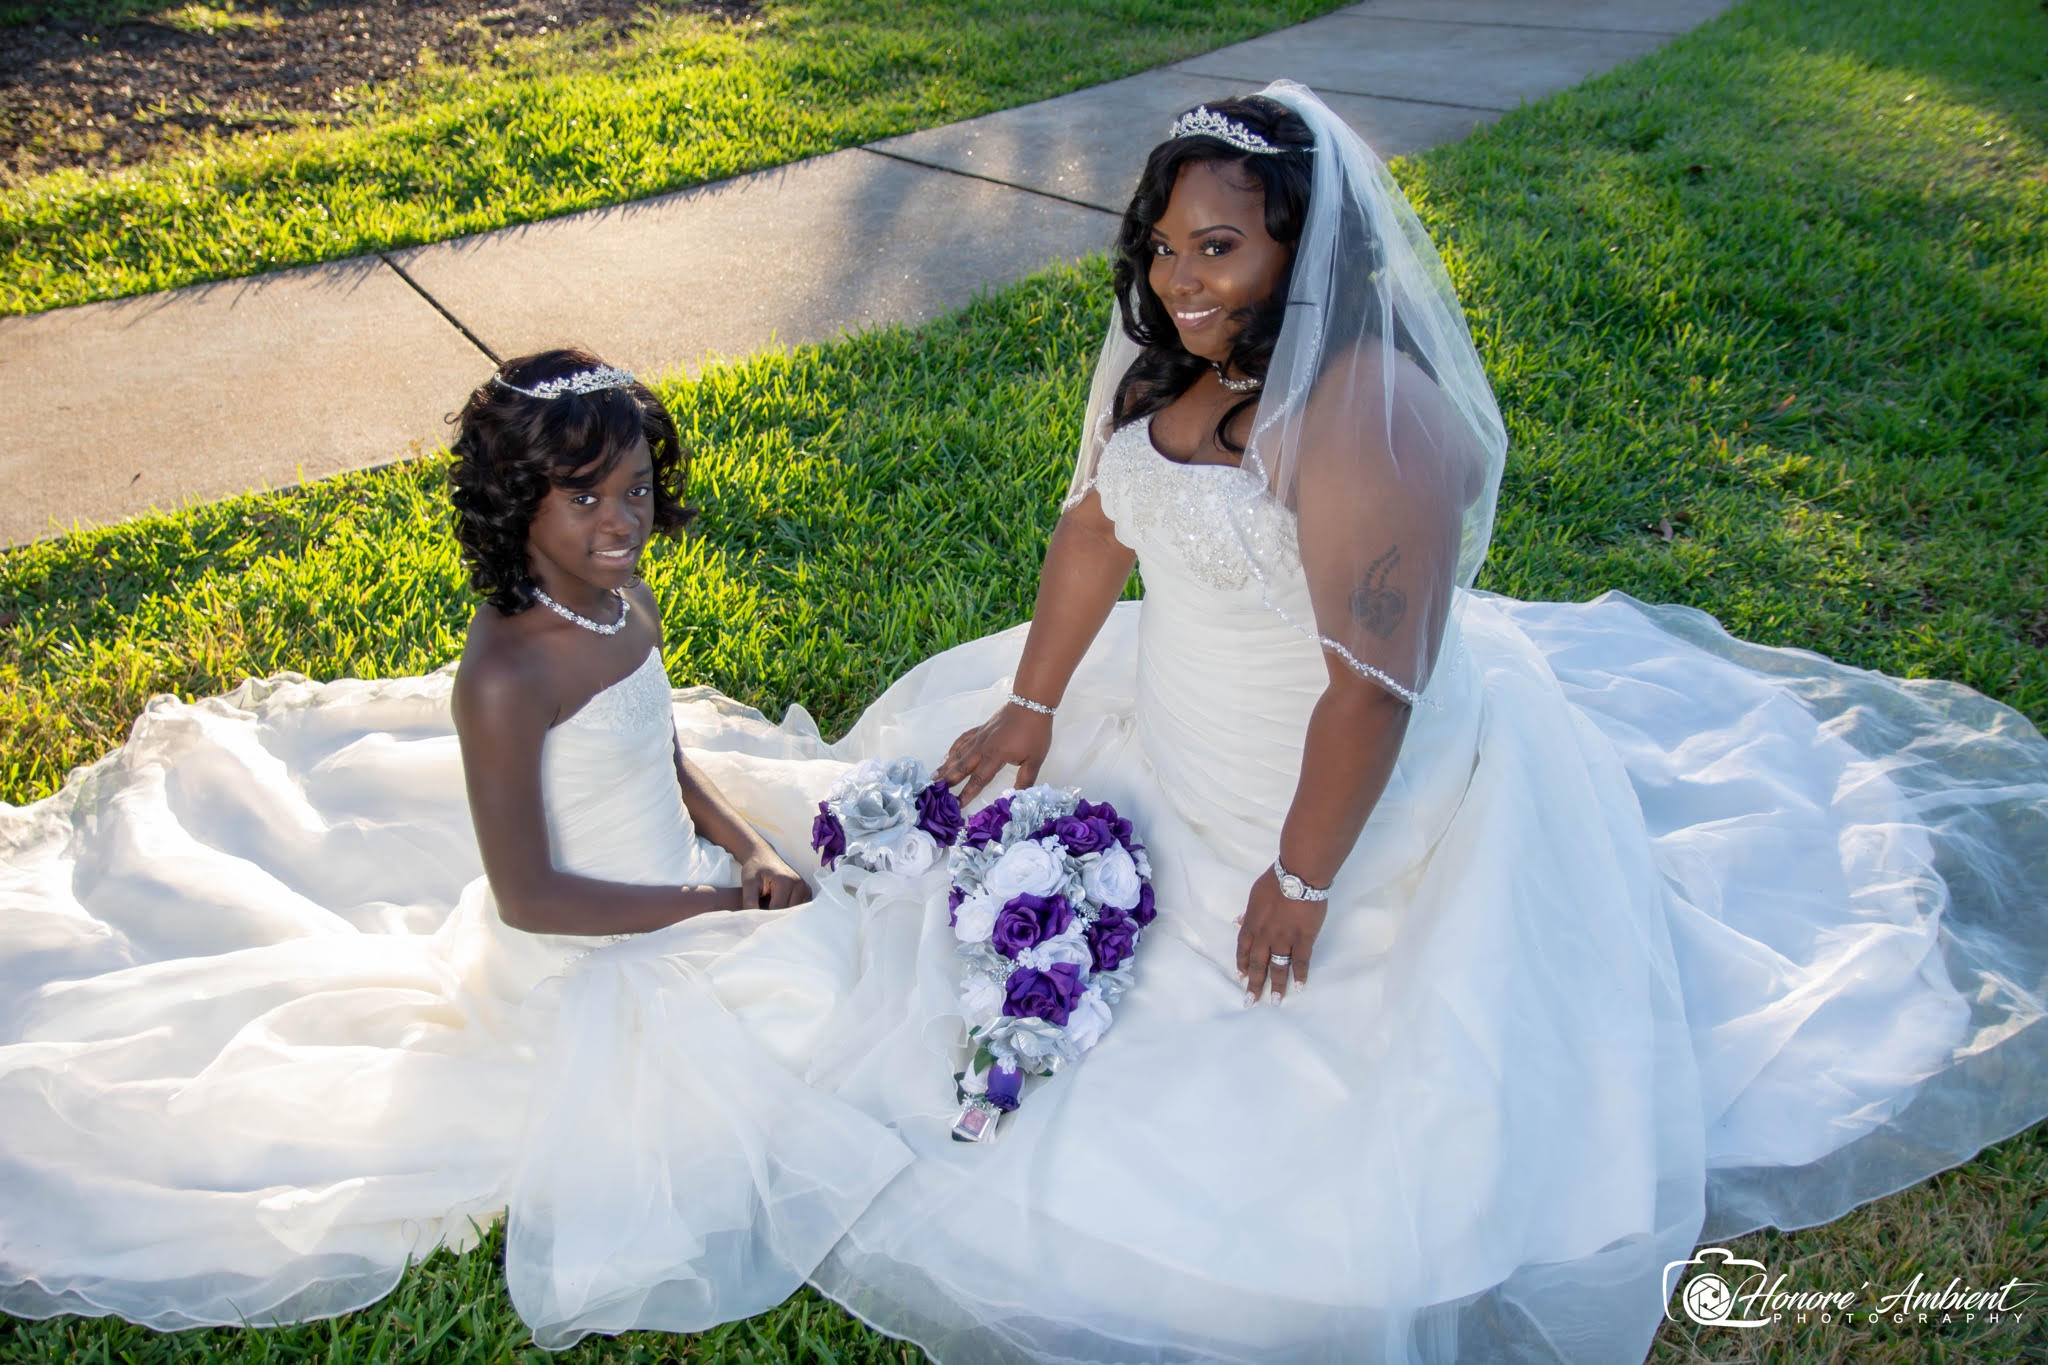 Matching flower girl and wedding dress